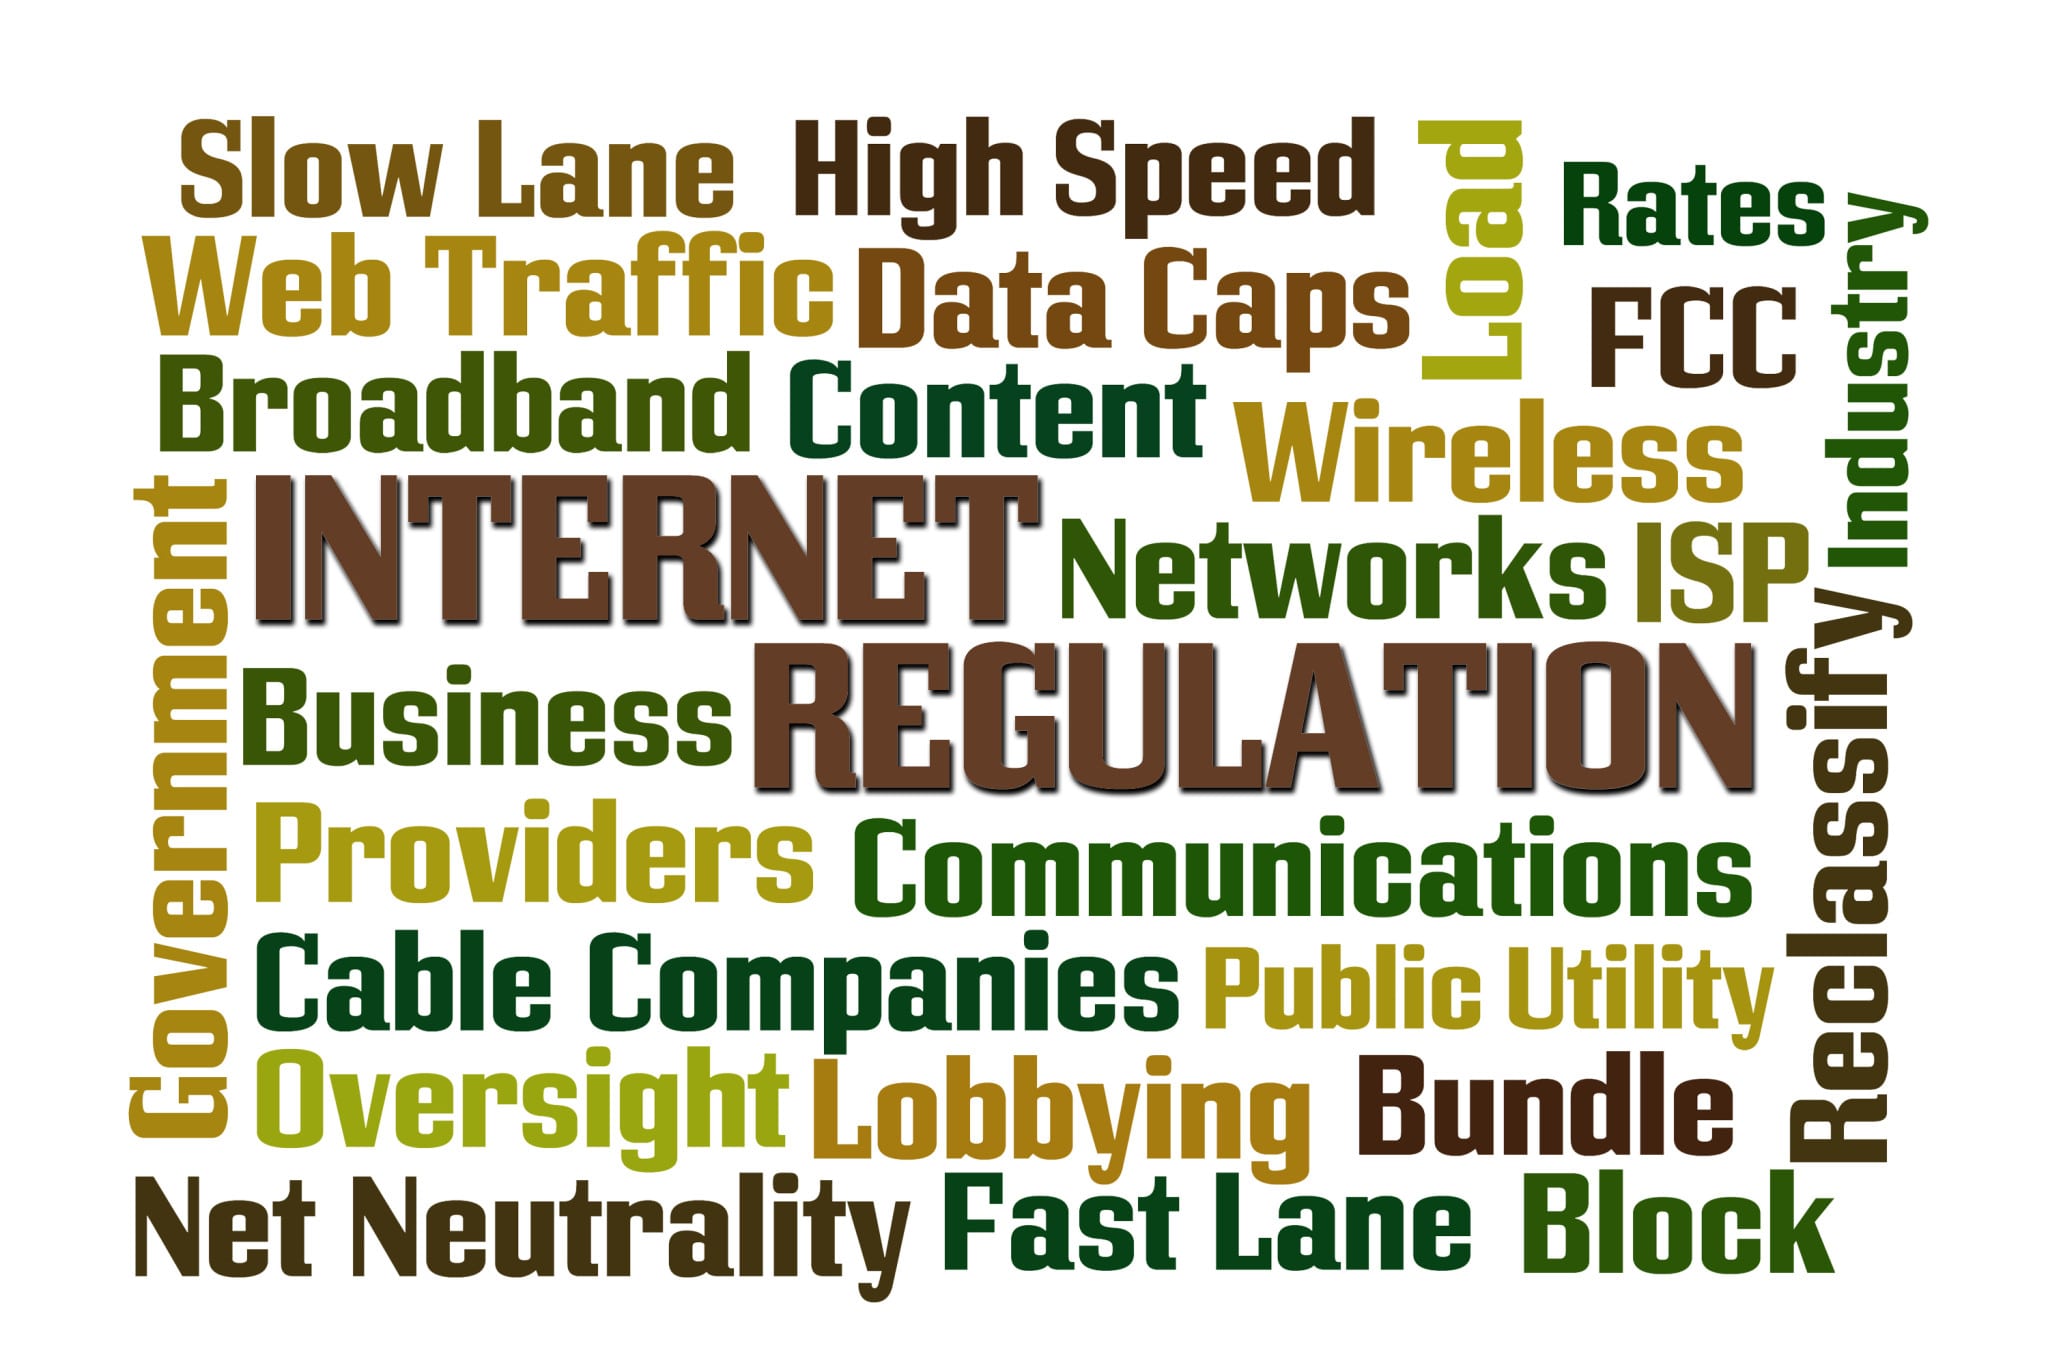 FCC, Level 3 and centurylink